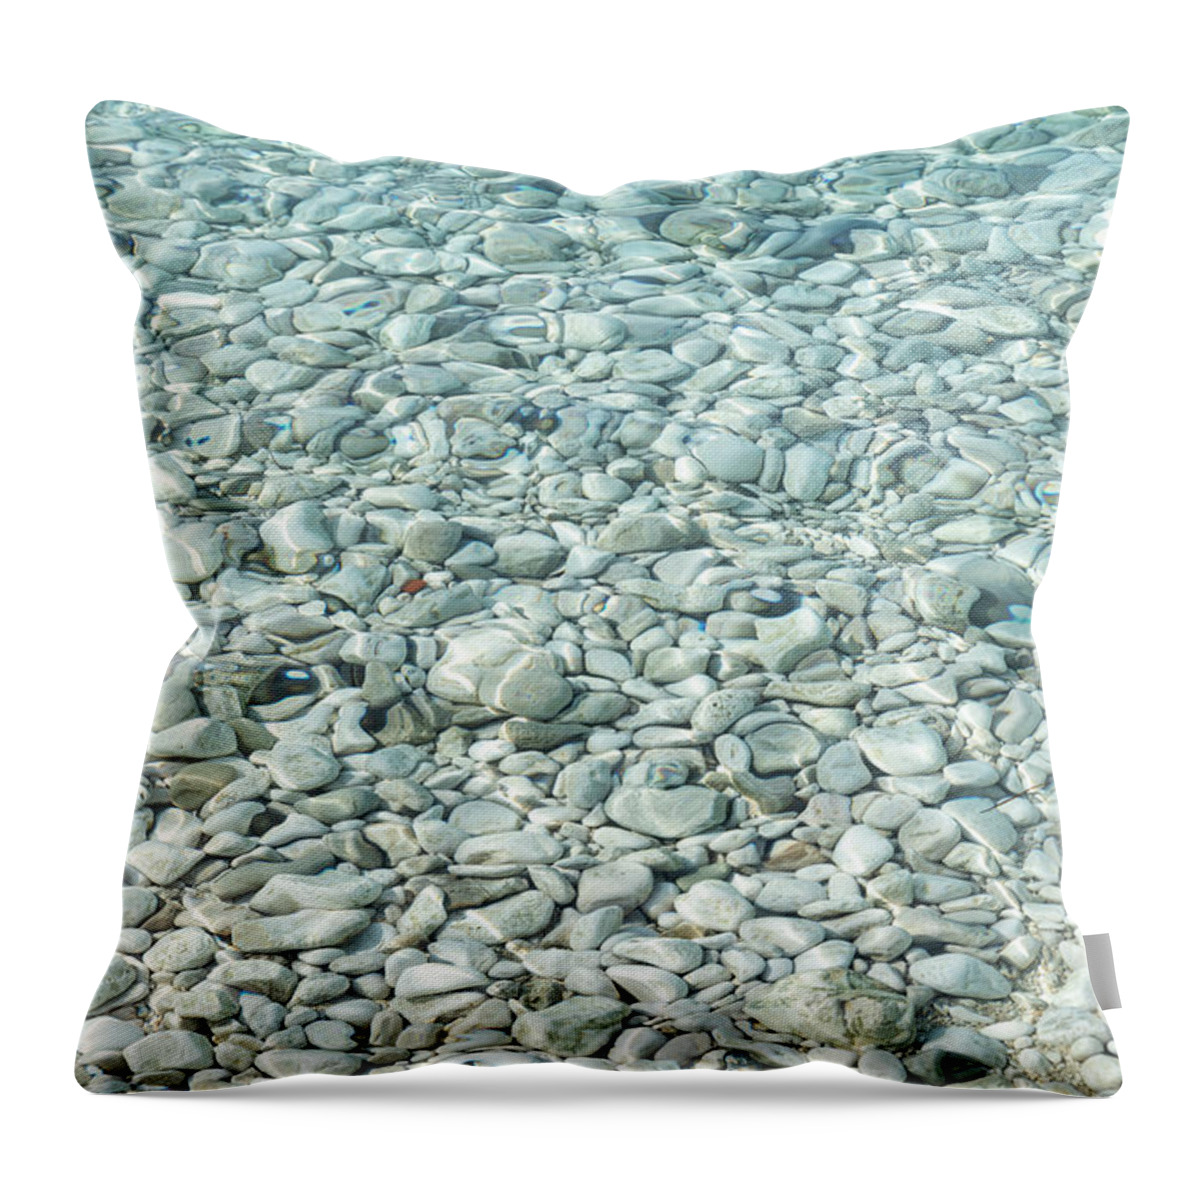 Vlora City Throw Pillow featuring the photograph Rocks of Sazan by Ari Rex